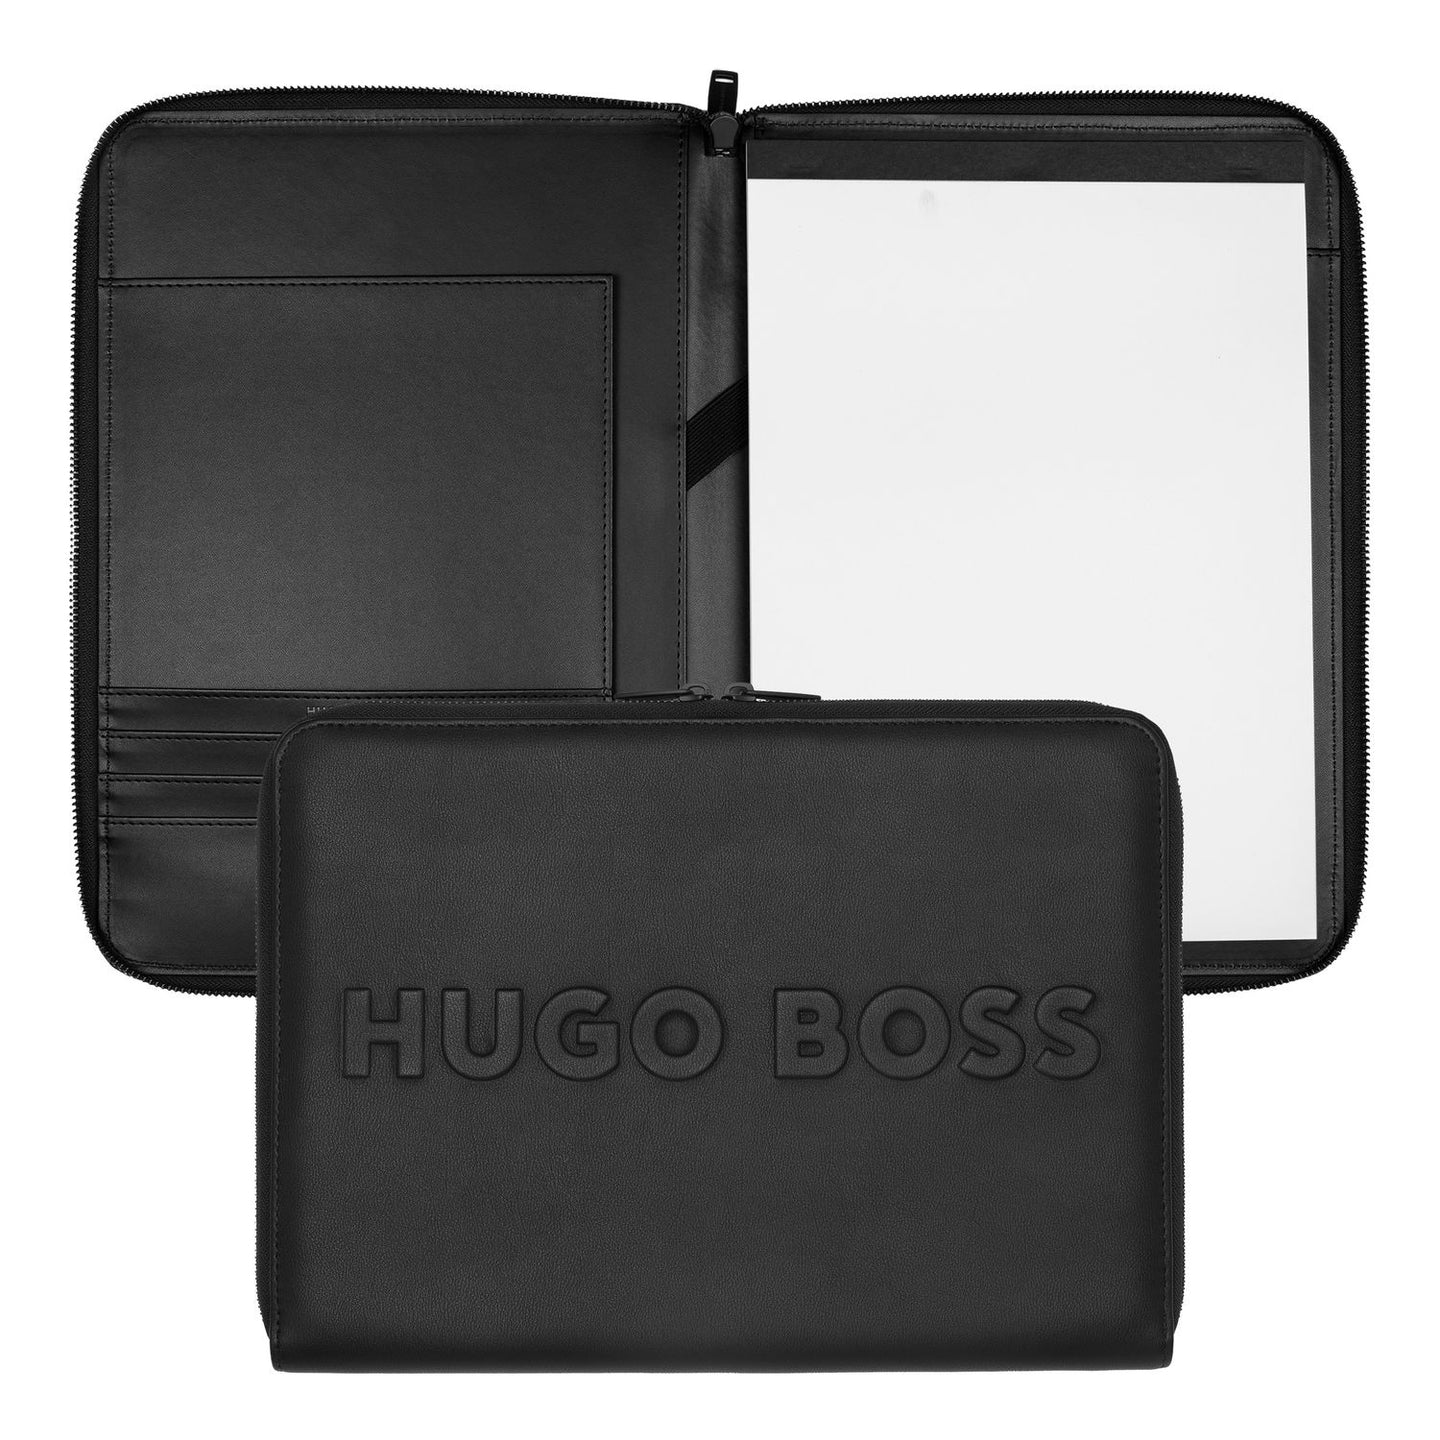 Hugo Boss A4 Schreibmappe LABEL Black